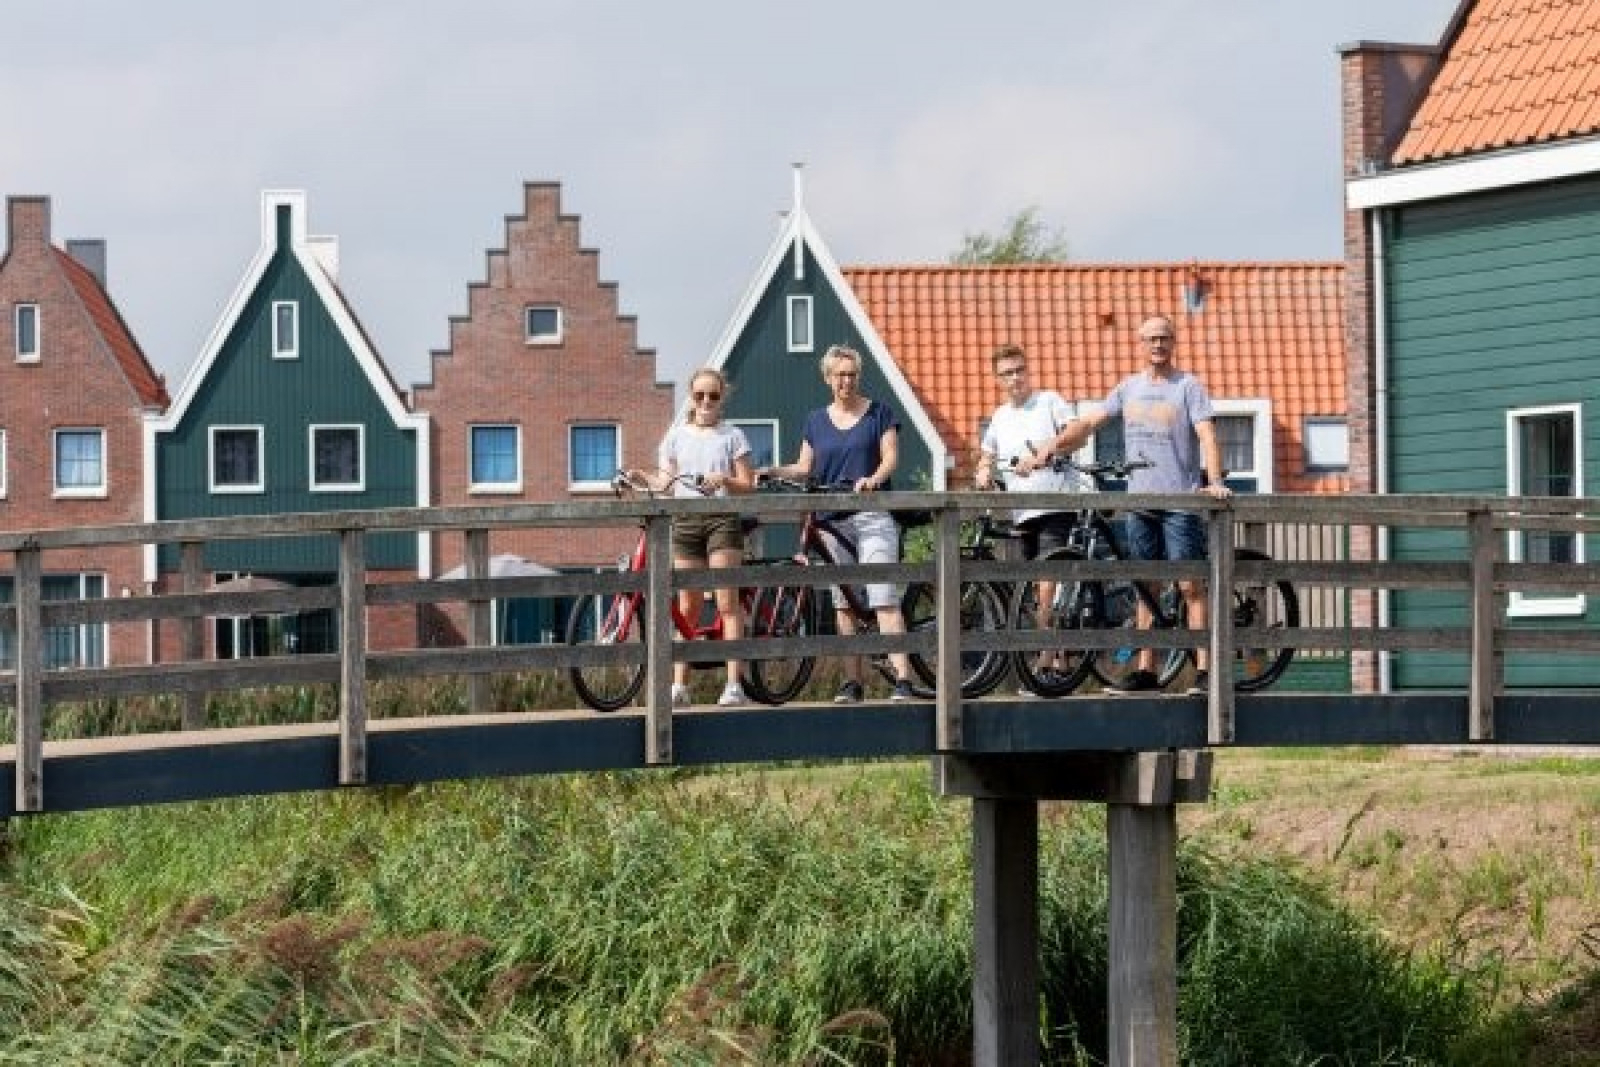 Marinapark Volendam - Holiday park